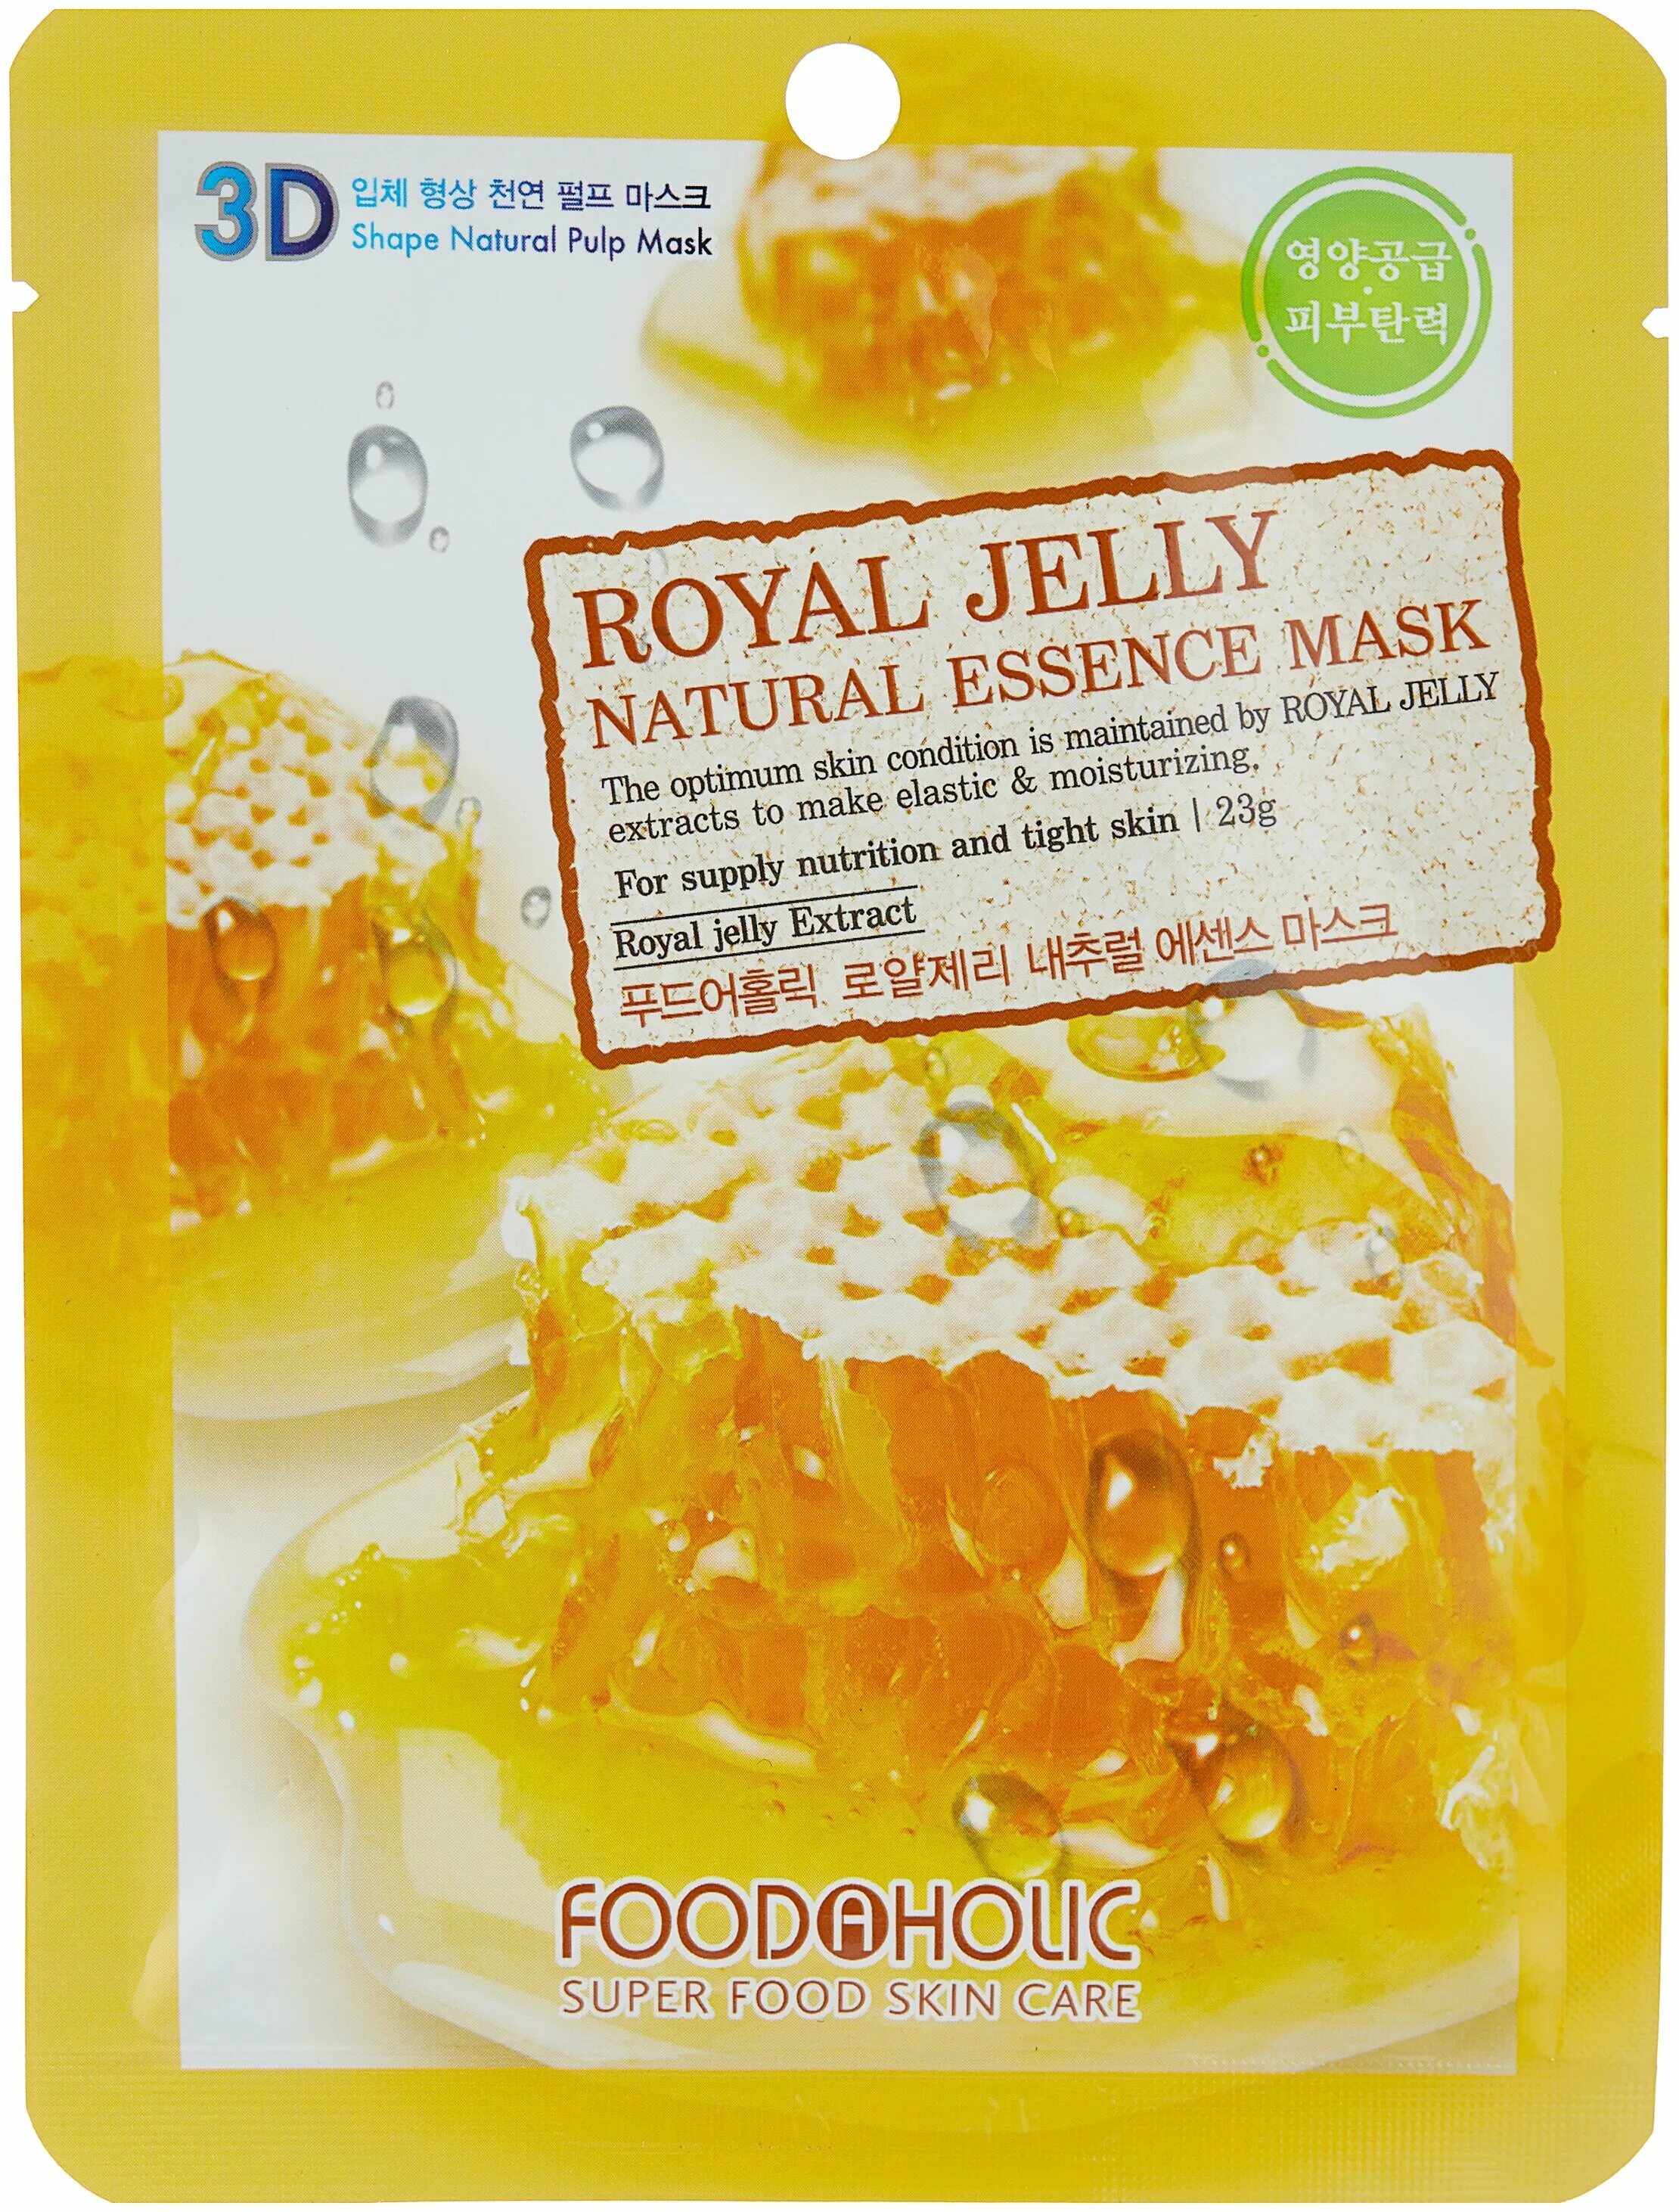 FOODAHOLIC маска тканевая 3d Royal Jelly, 23 мл. FOODAHOLIC natural Essence Mask #Royal Jelly 3d. FOODAHOLIC маска тканевая FOODAHOLIC 3d Mask Sheet Royal Jelly (23ml) 23мл. Маска д/лица тканевая с экстрактом маточного молочка FOODAHOLIC. Маска royal jelly